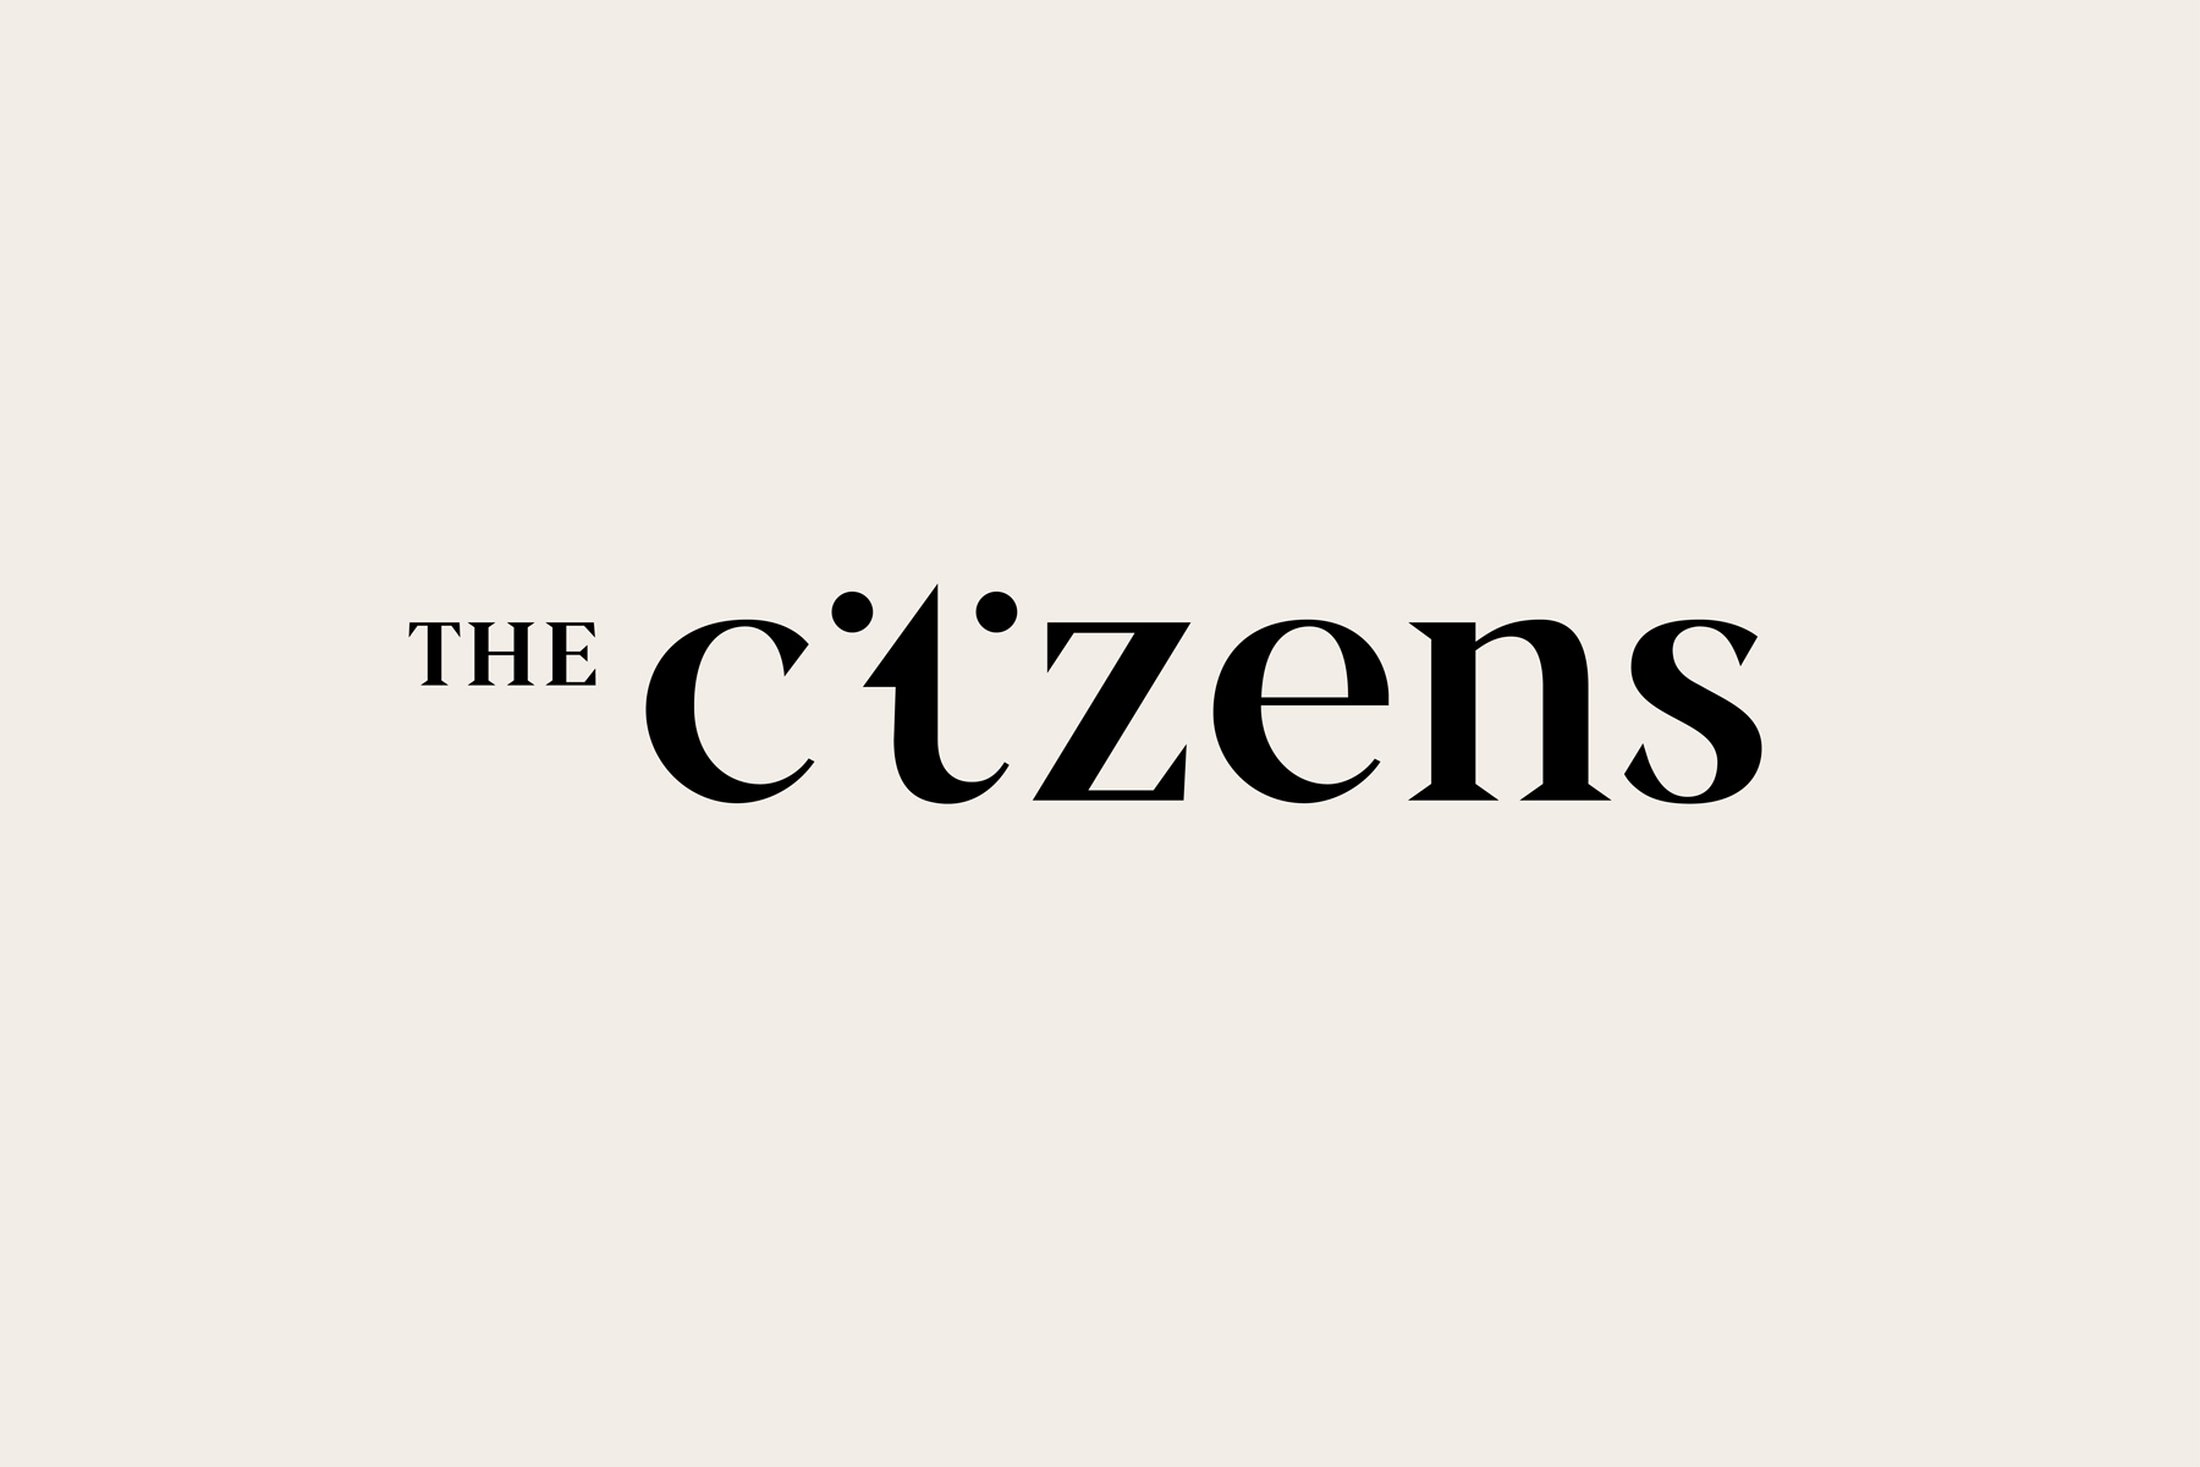 paul_belford_ltd_the_citizens_logo2.jpg